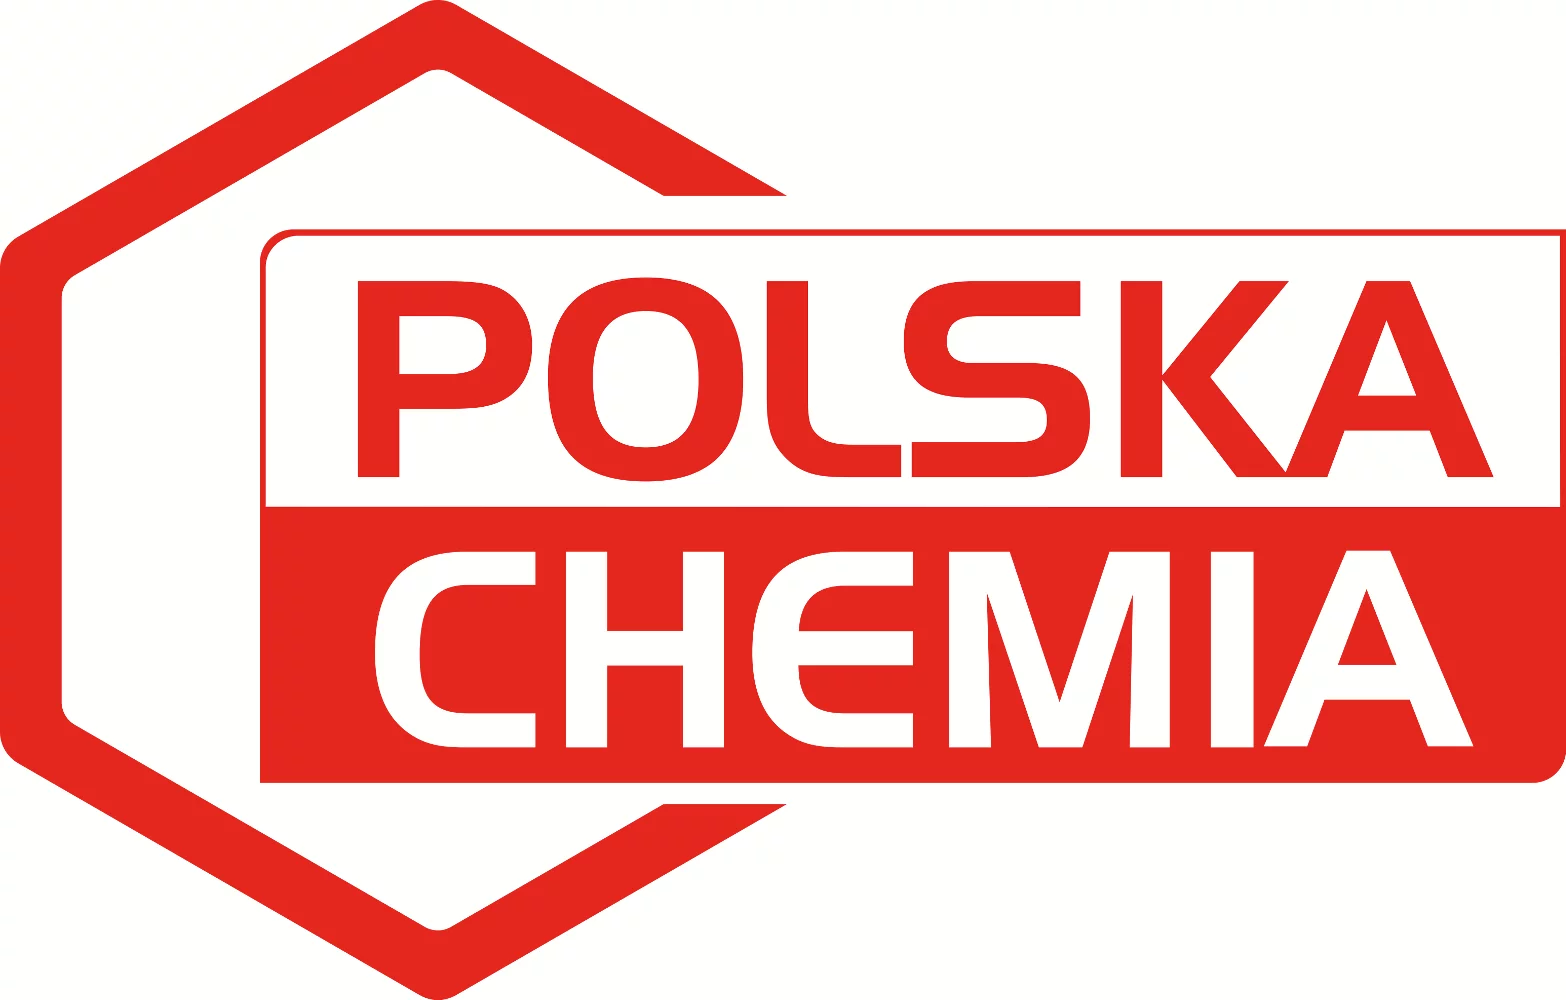 Polska Chemia logo